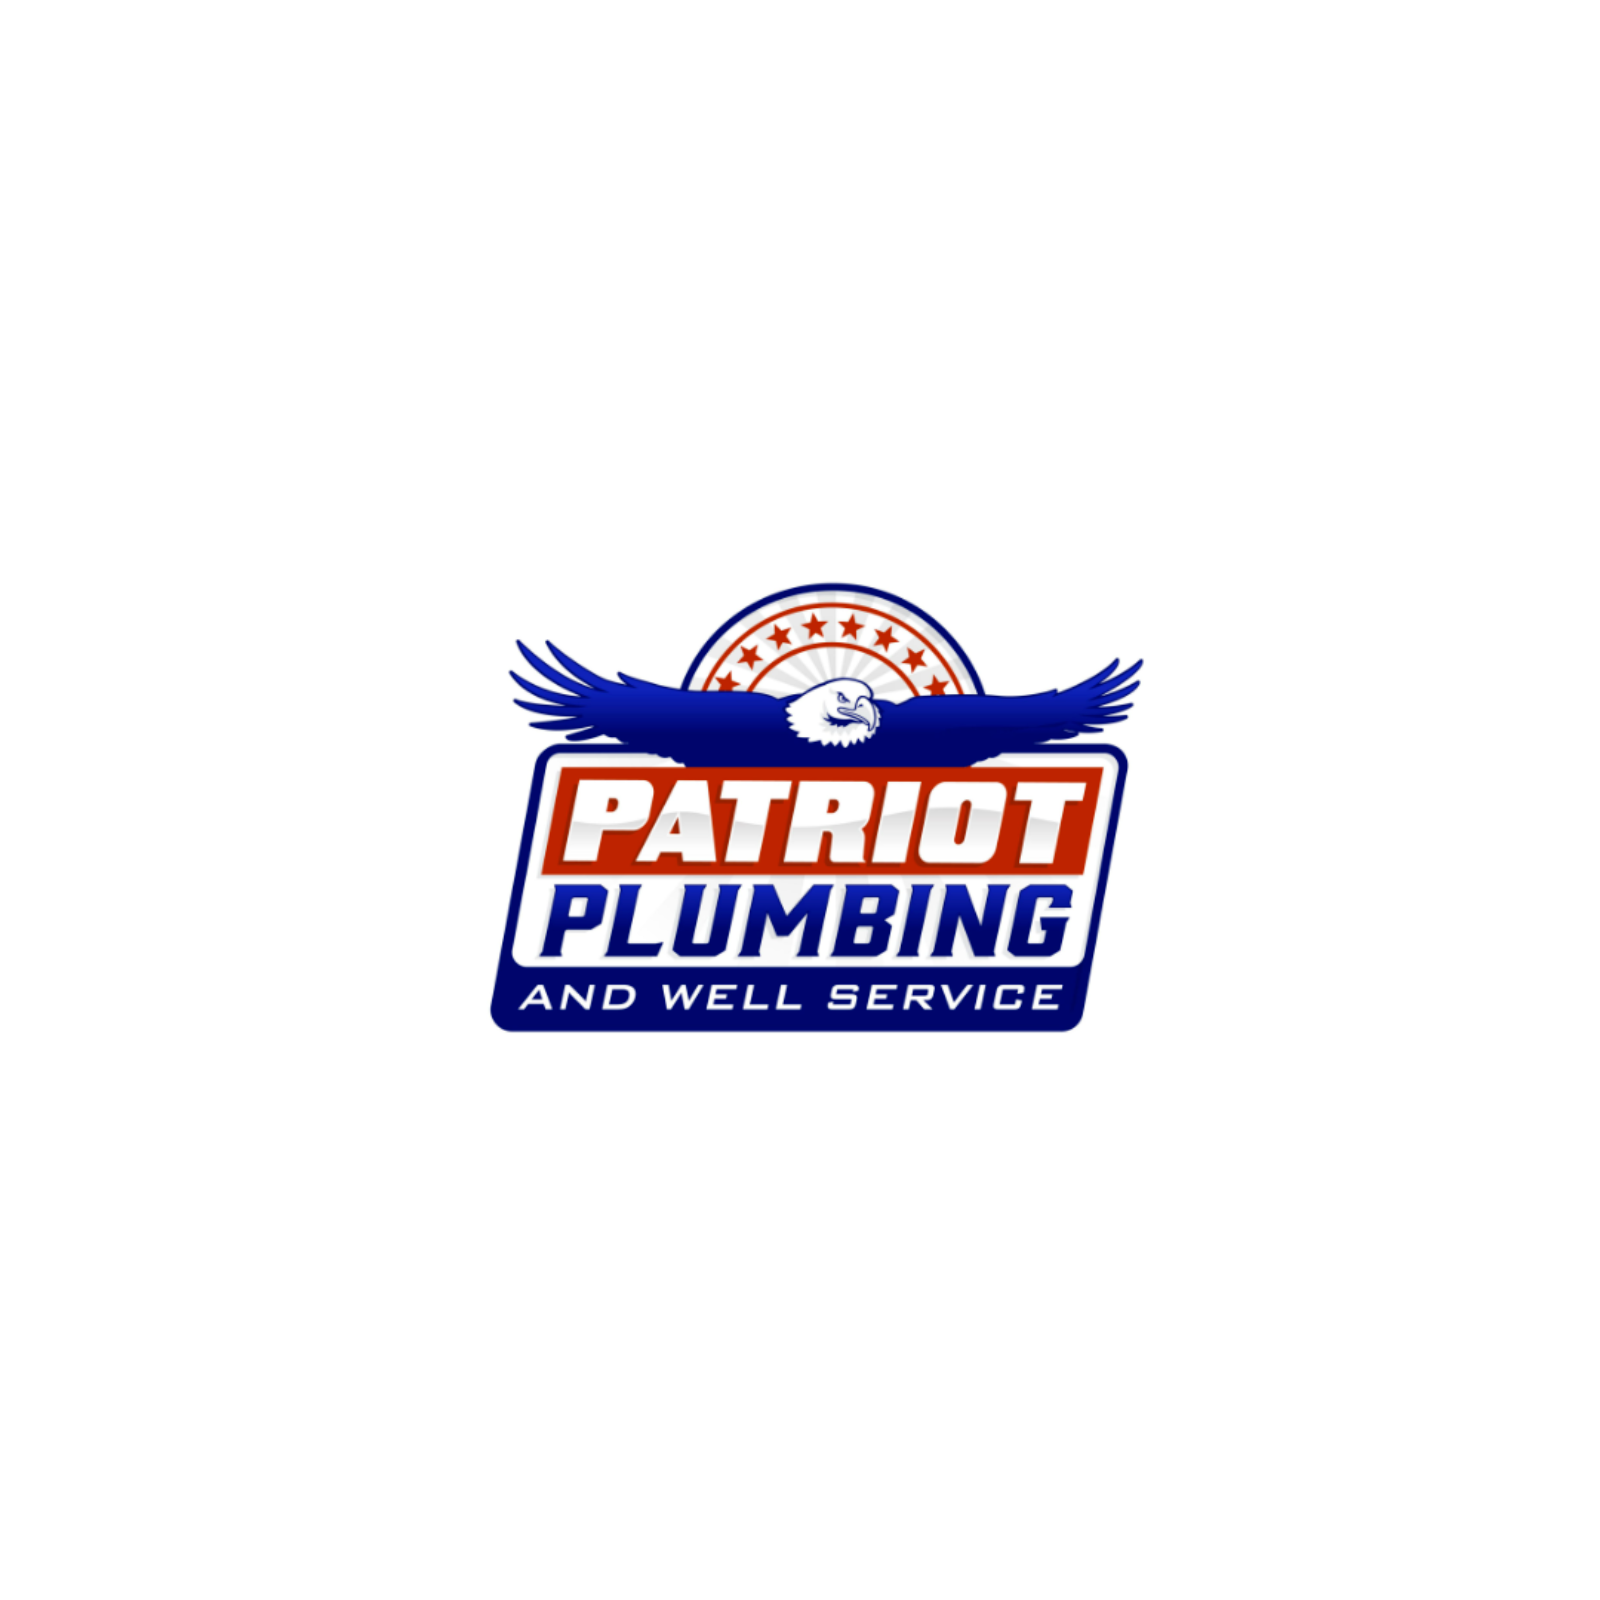 Patriot Plumbing and Well Service - Fredericksburg, VA - (540)288-3209 | ShowMeLocal.com